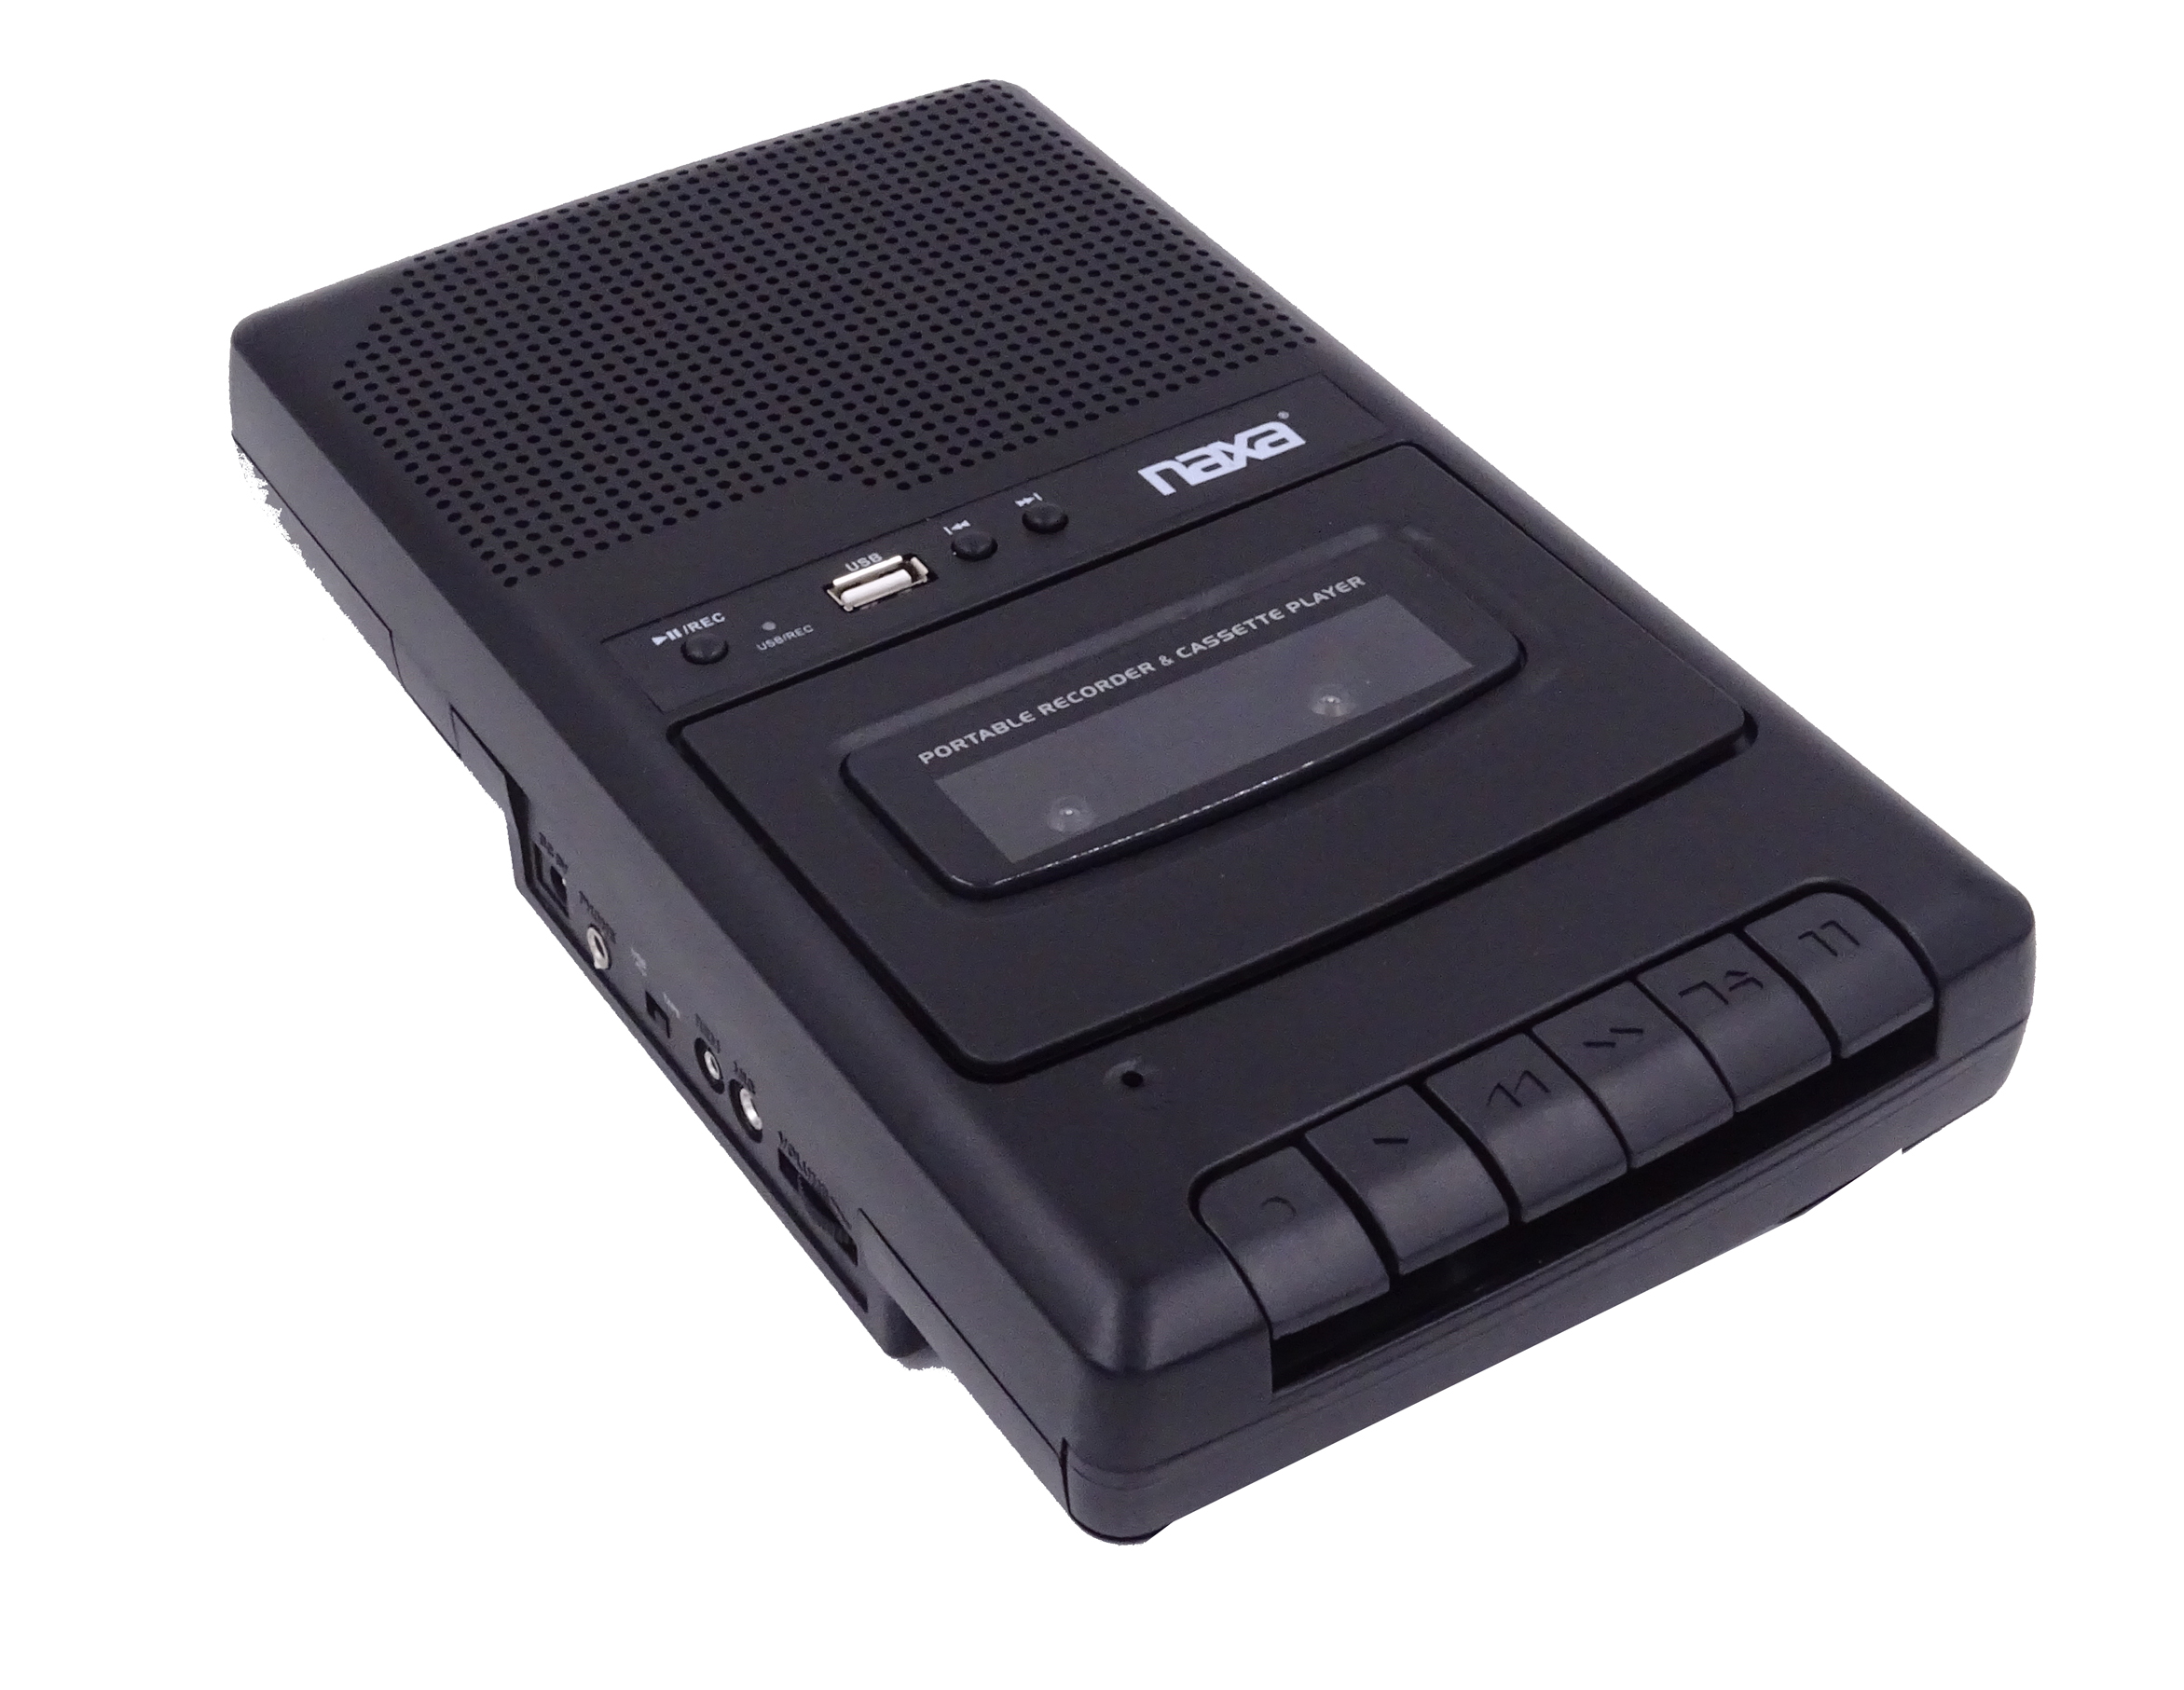 Portable Cassette Recorder & Digital Converter – Naxa Electronics